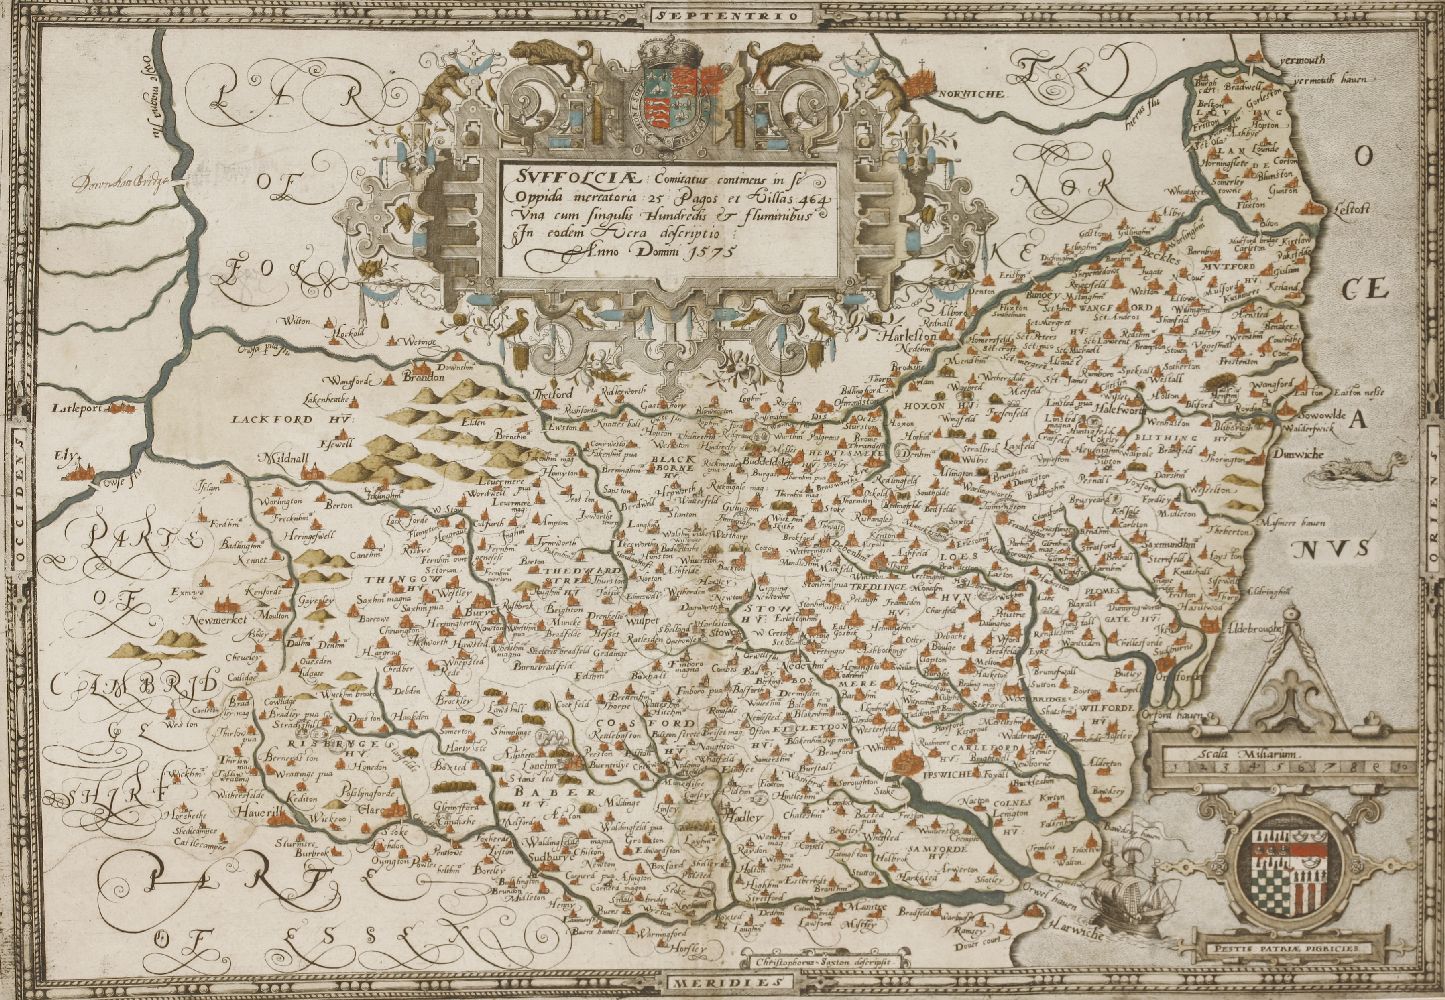 Christopher Saxton,A map of Suffolk,16th century, 'Suffolciae Comitatus Continens in Oppida